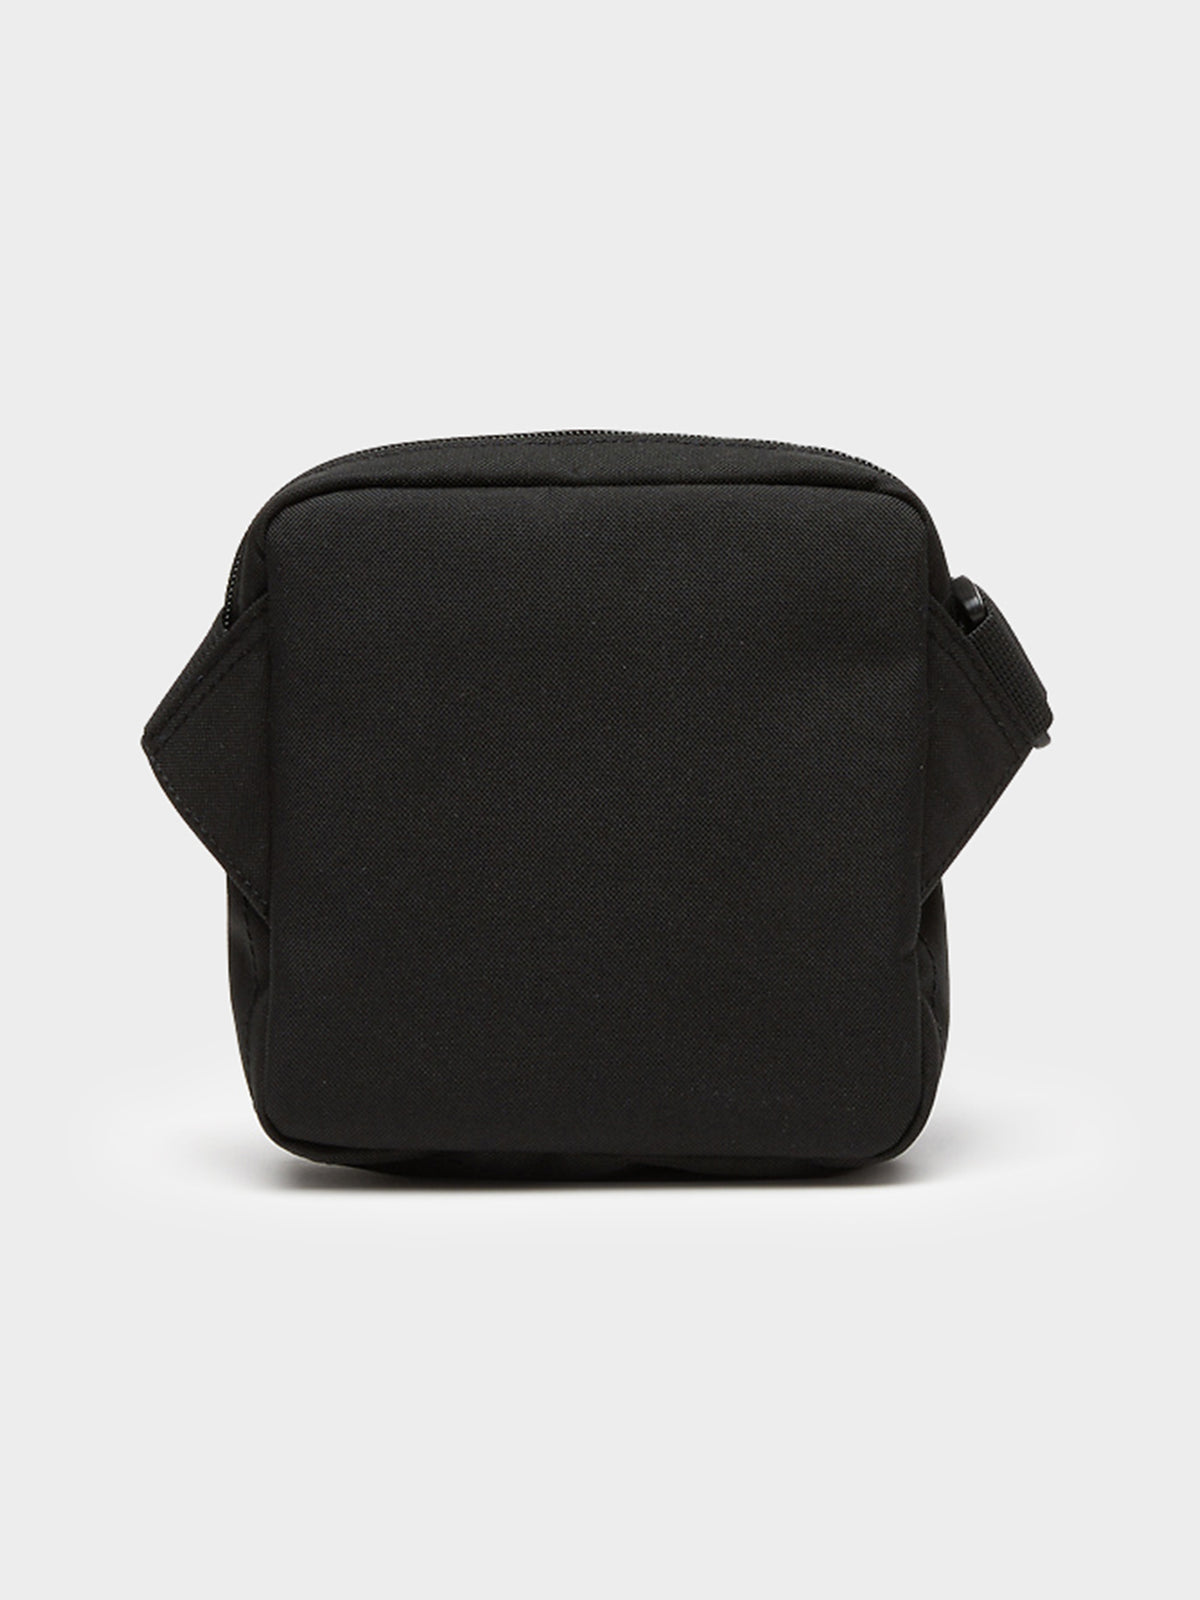 NeoCroc Square Camera Bag in Noir